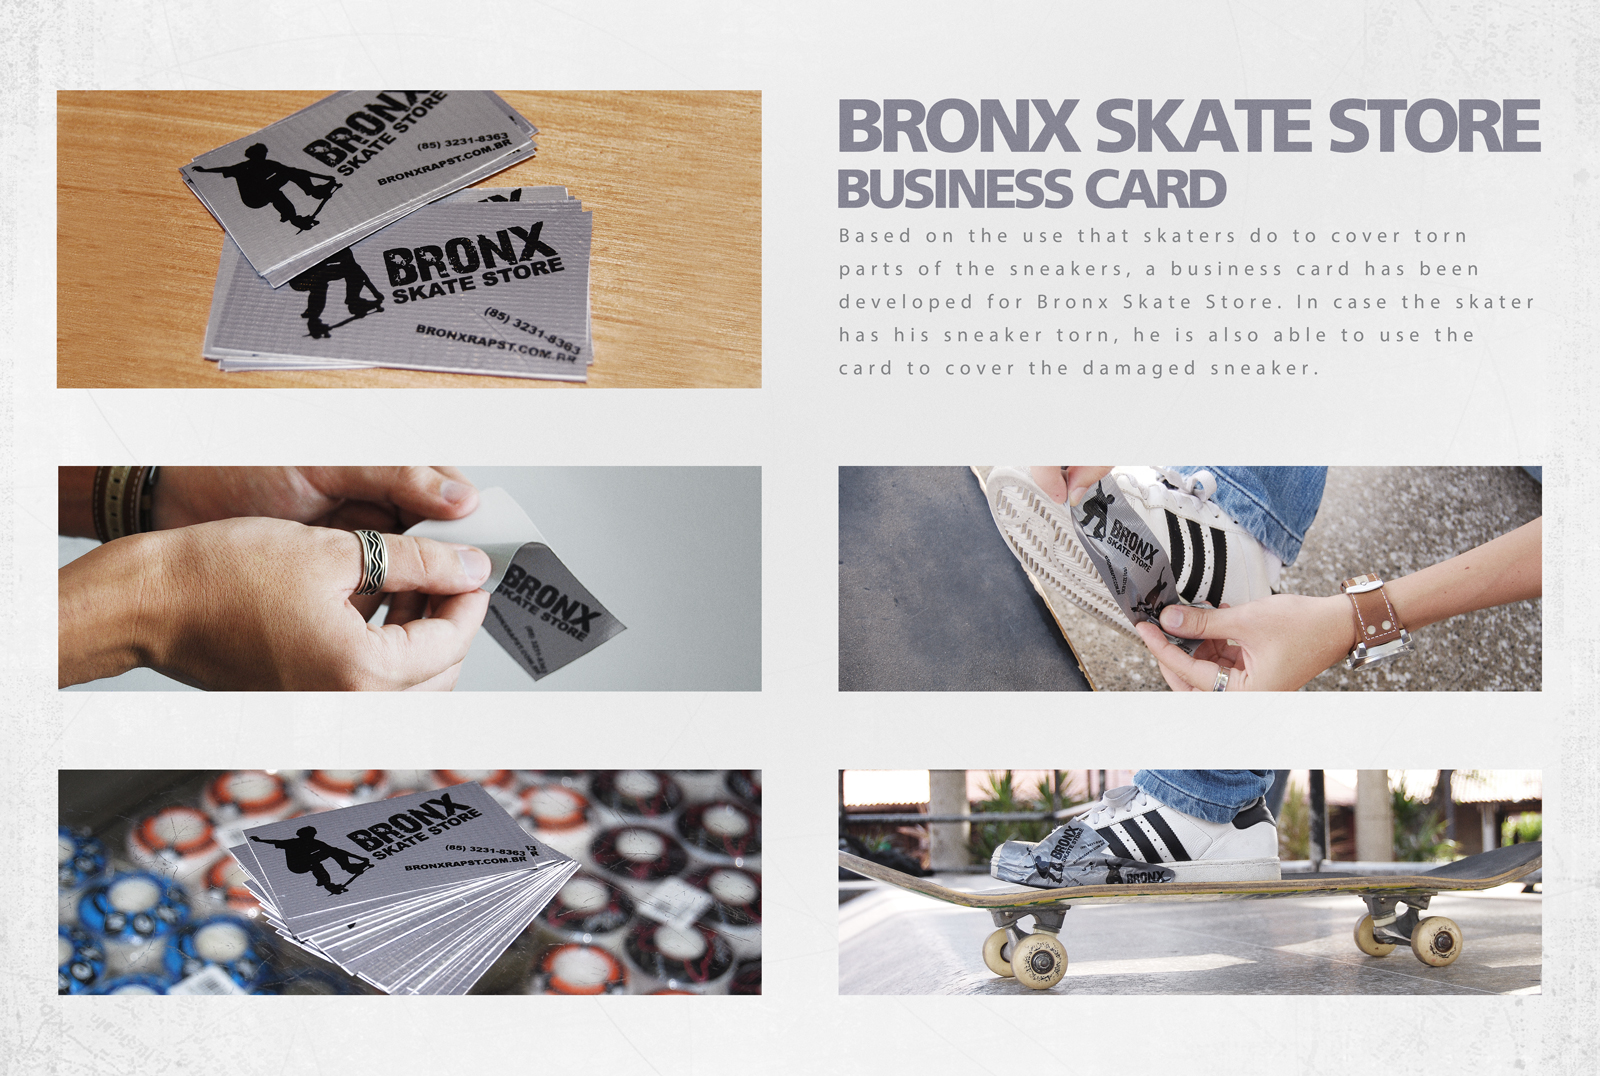 Bronx_Skate_Store_Business_Card_ibelieveinadv.jpg